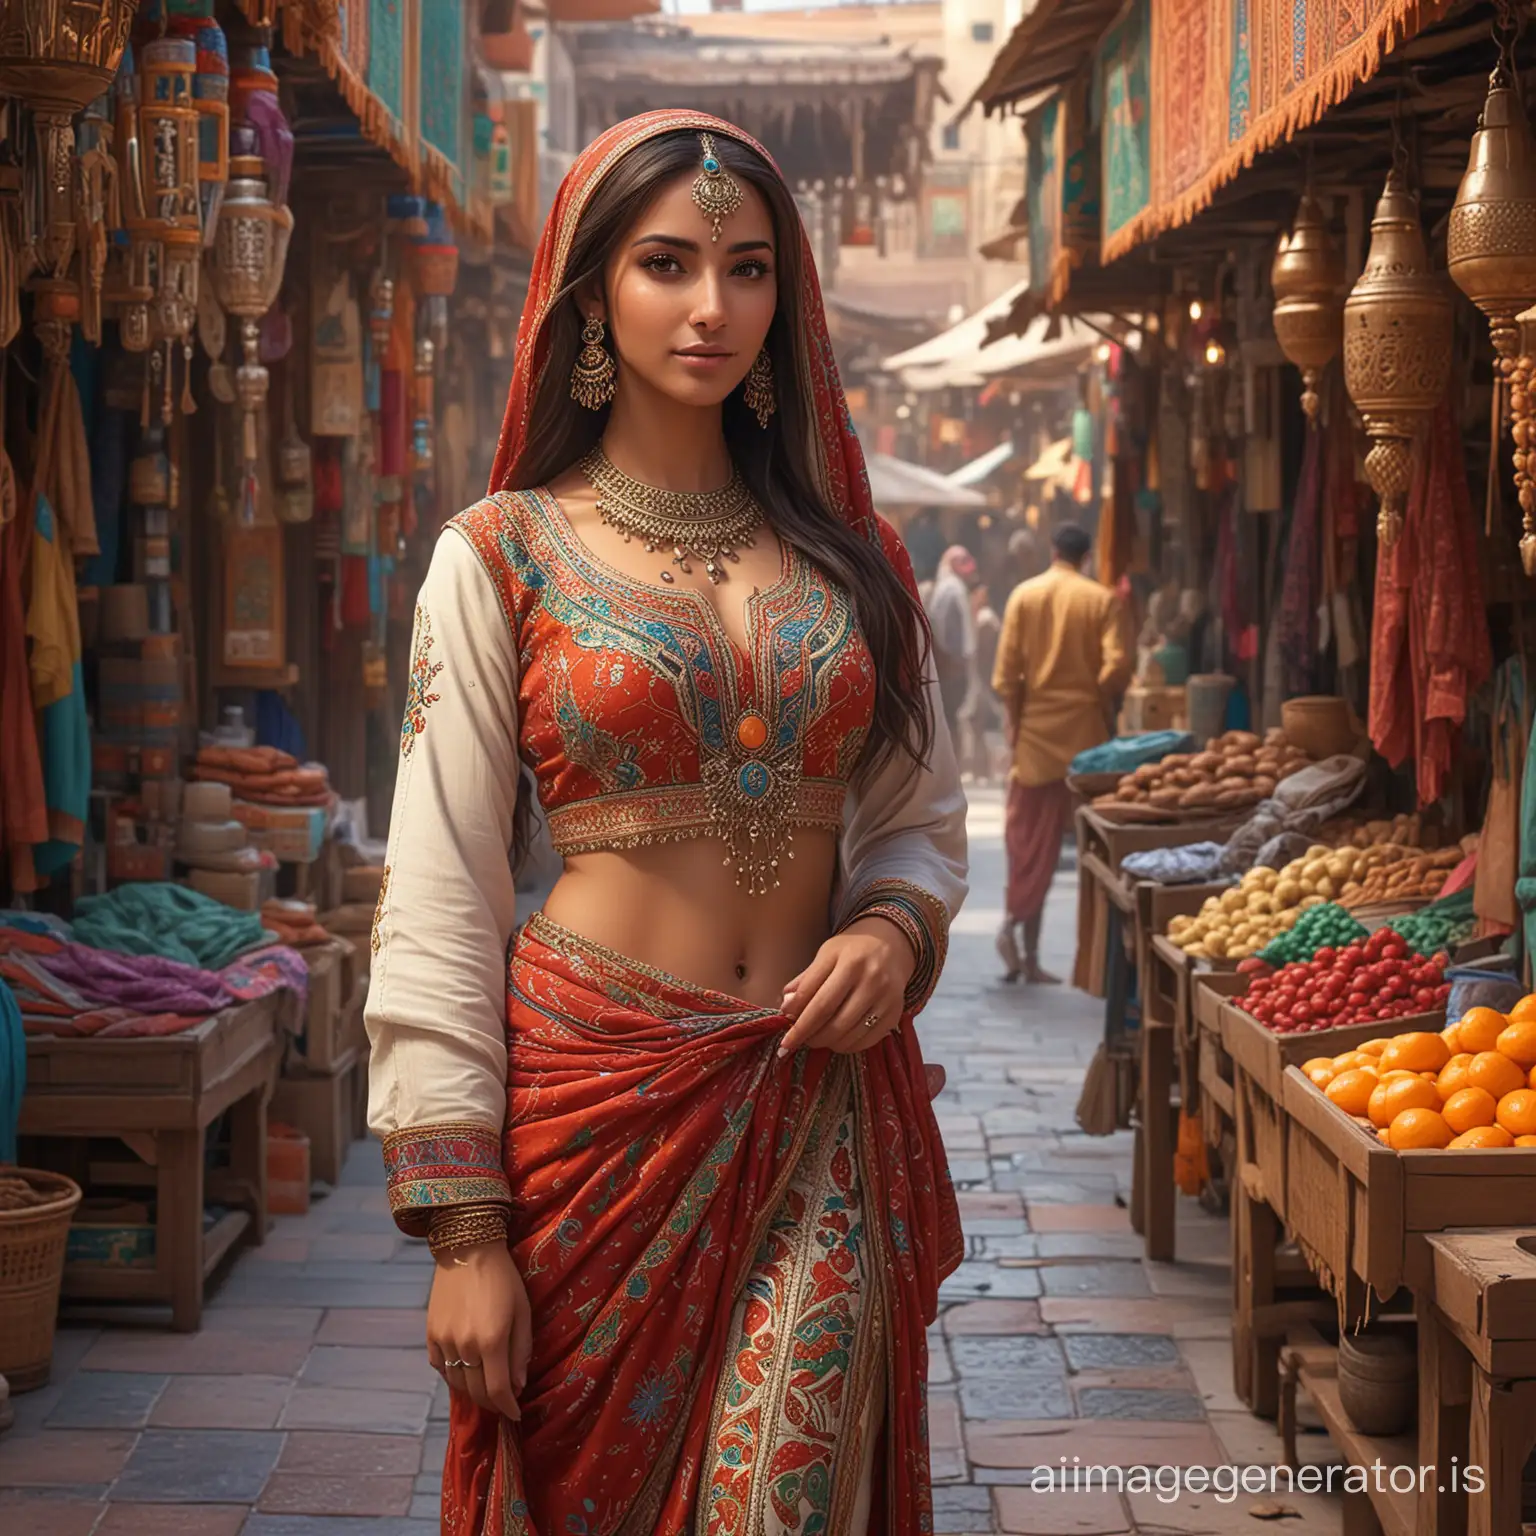 Exotic-Arab-Woman-in-Traditional-Market-Scene